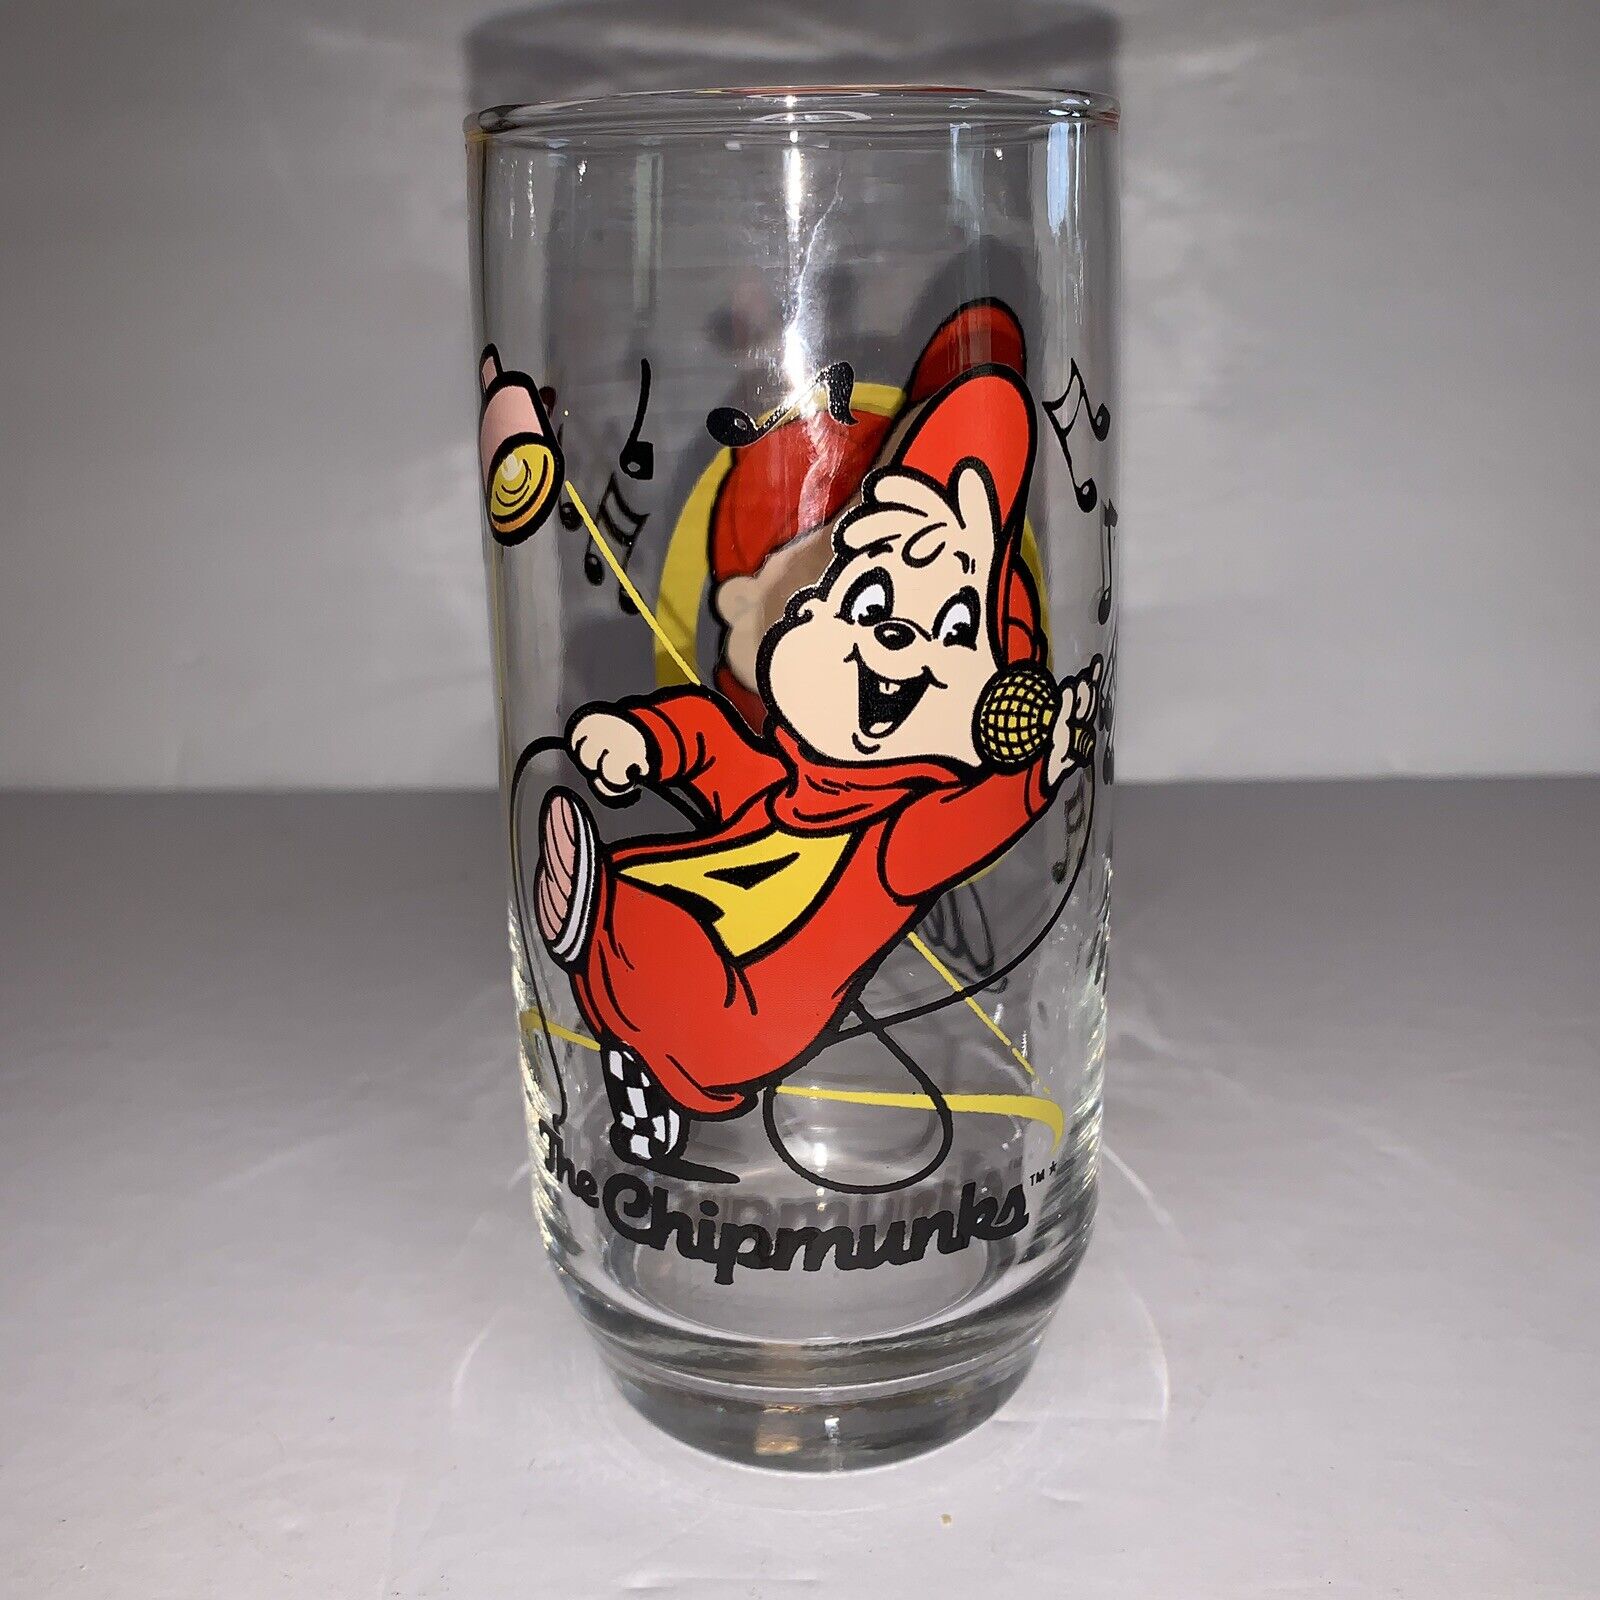 Vintage Chipmunks Glass 1985 Alvin & The Chipmunks Glass E10 for Sale ...